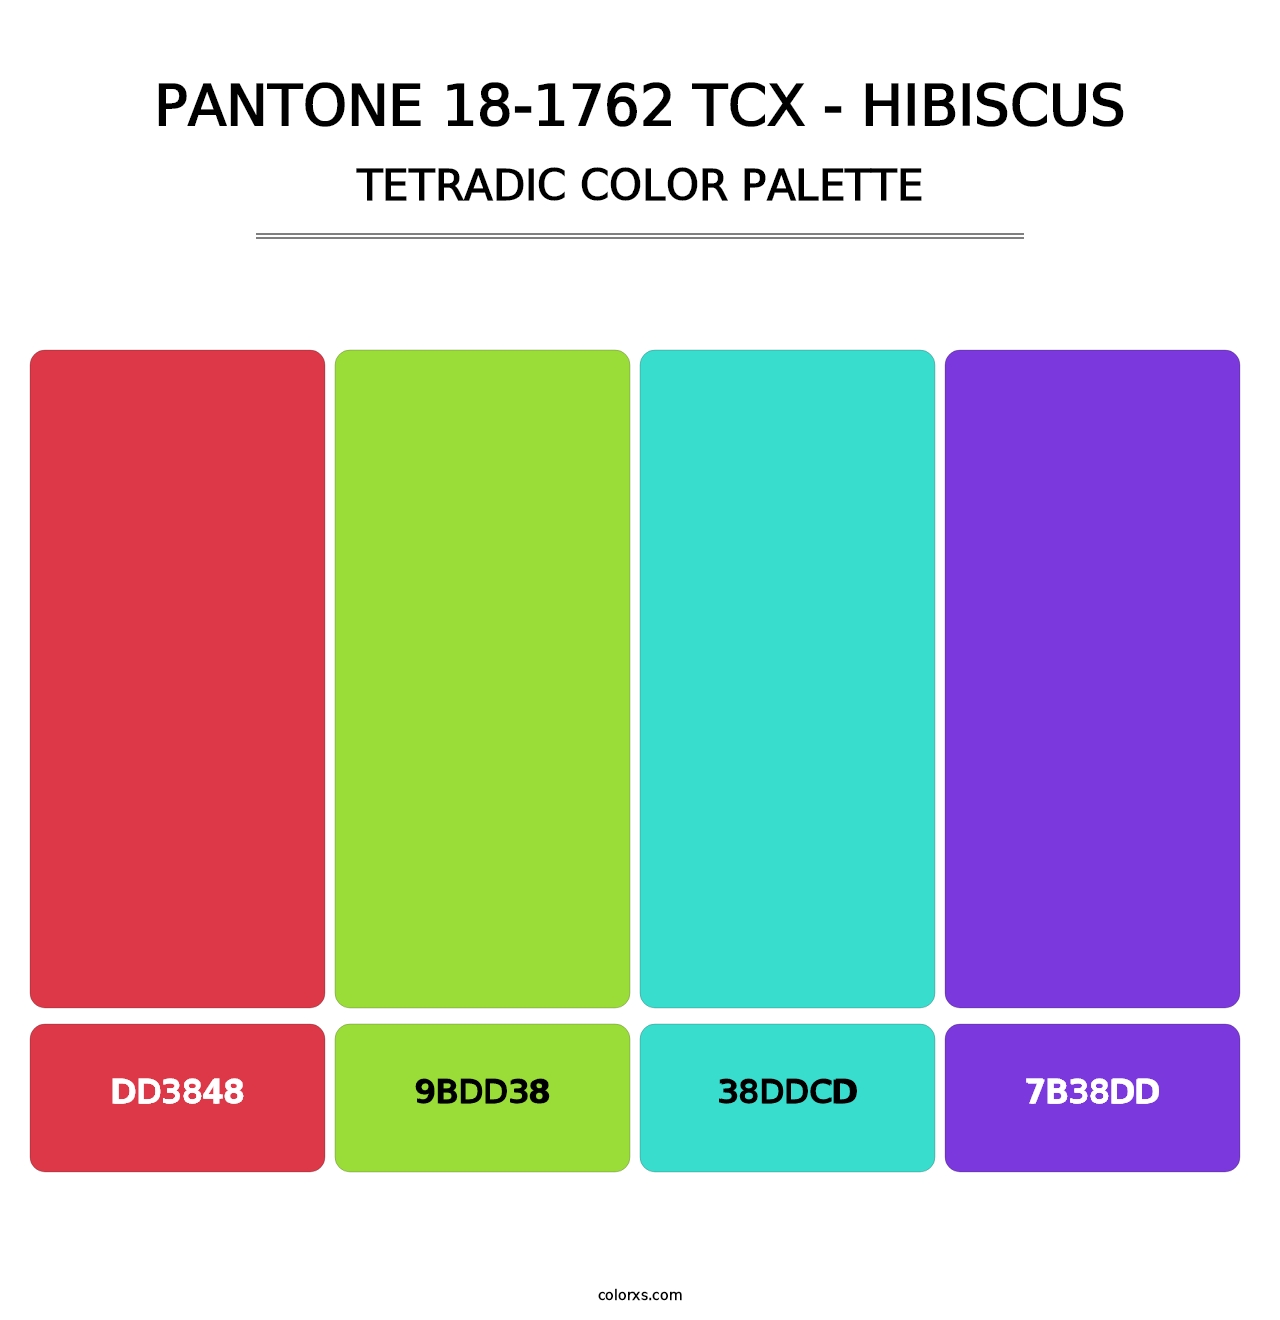 PANTONE 18-1762 TCX - Hibiscus - Tetradic Color Palette